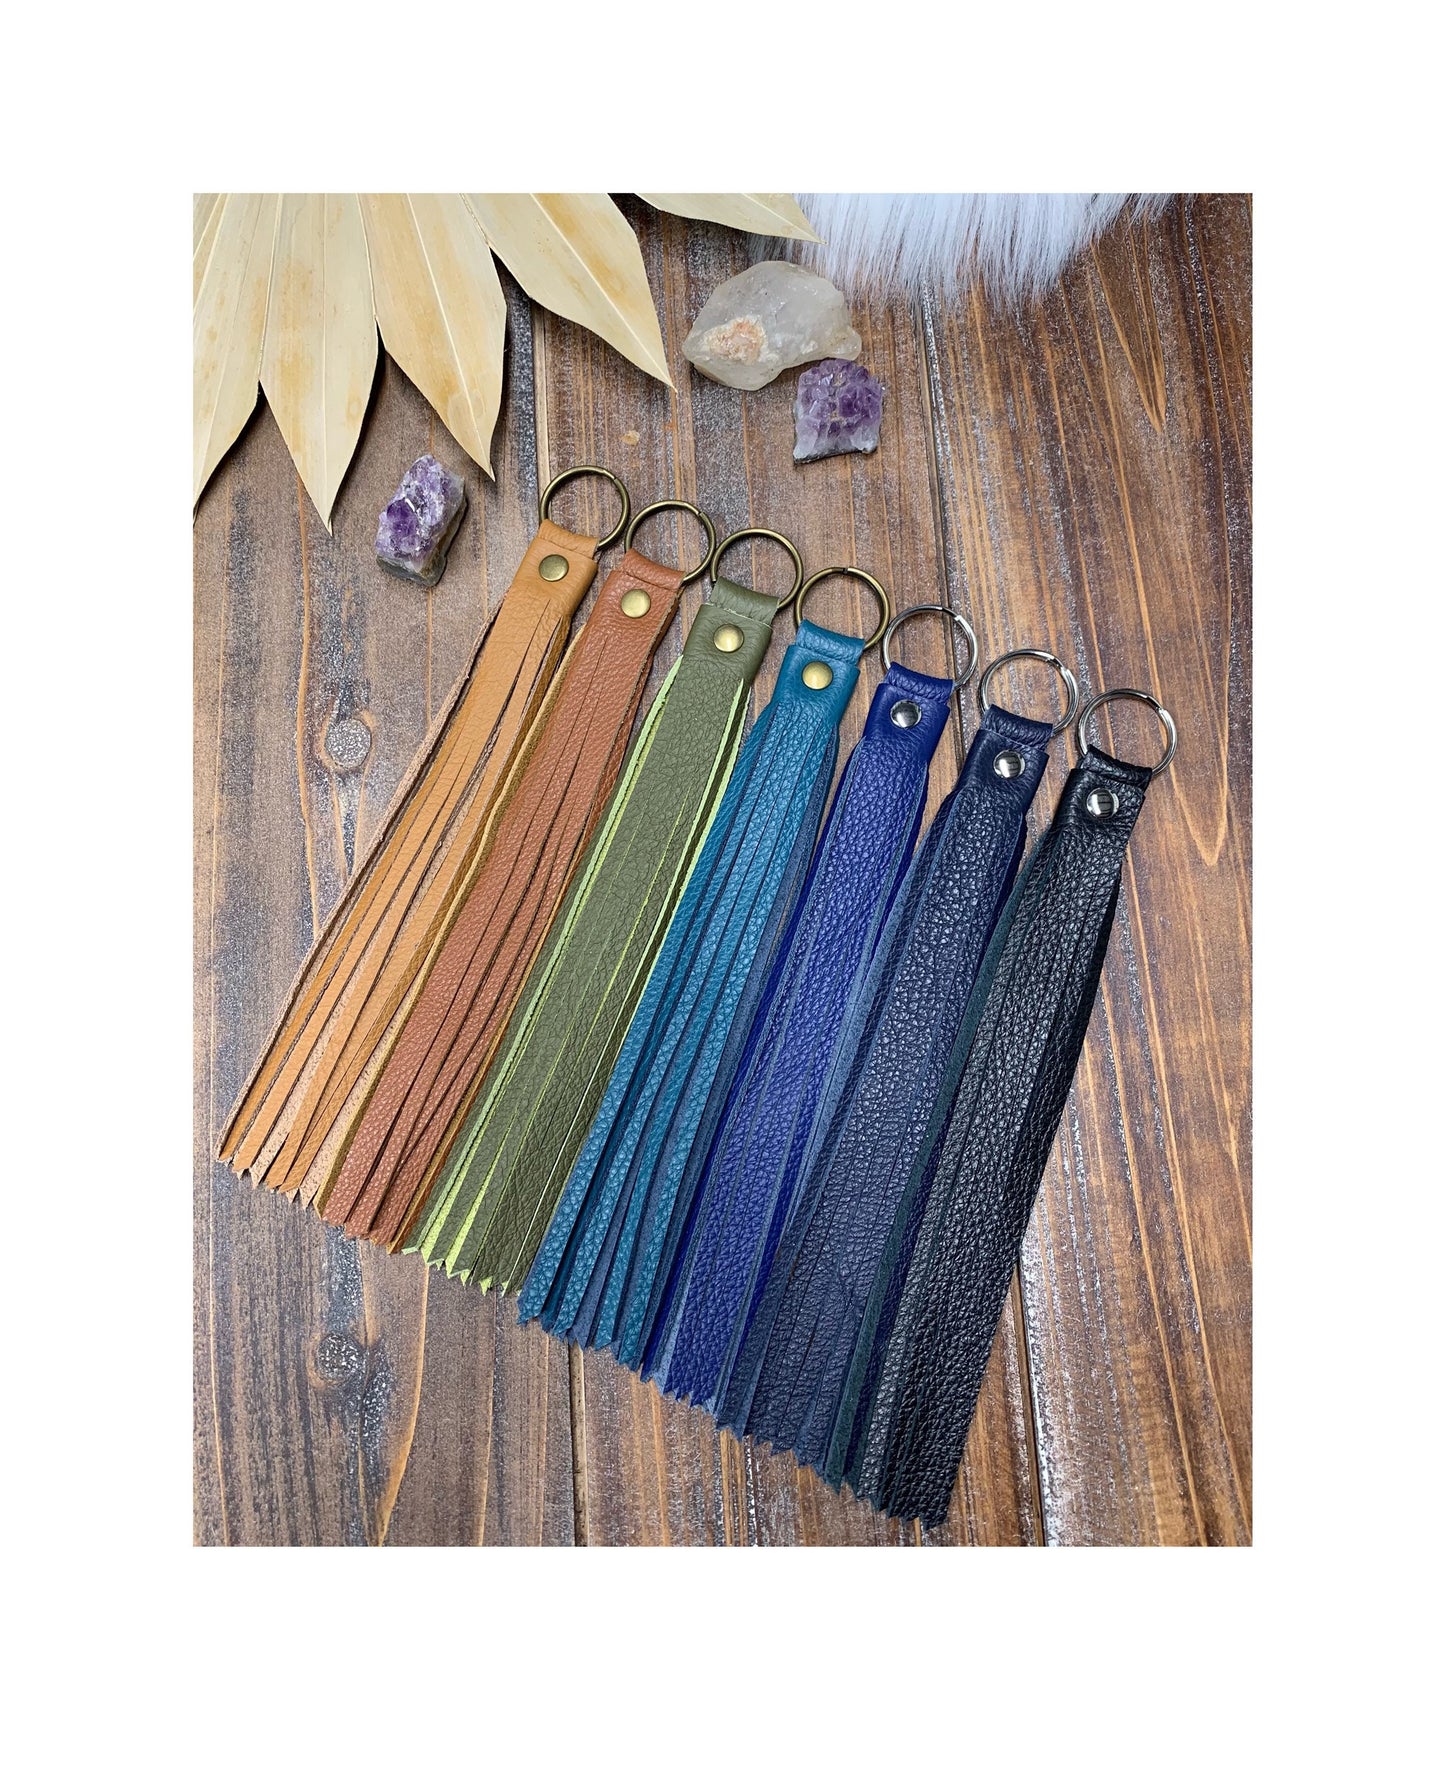 Leather tassel, single leather key chain, leather bag charm, leather zipper  pull, tassels for handbags, leather fringe, genuine pebble grain